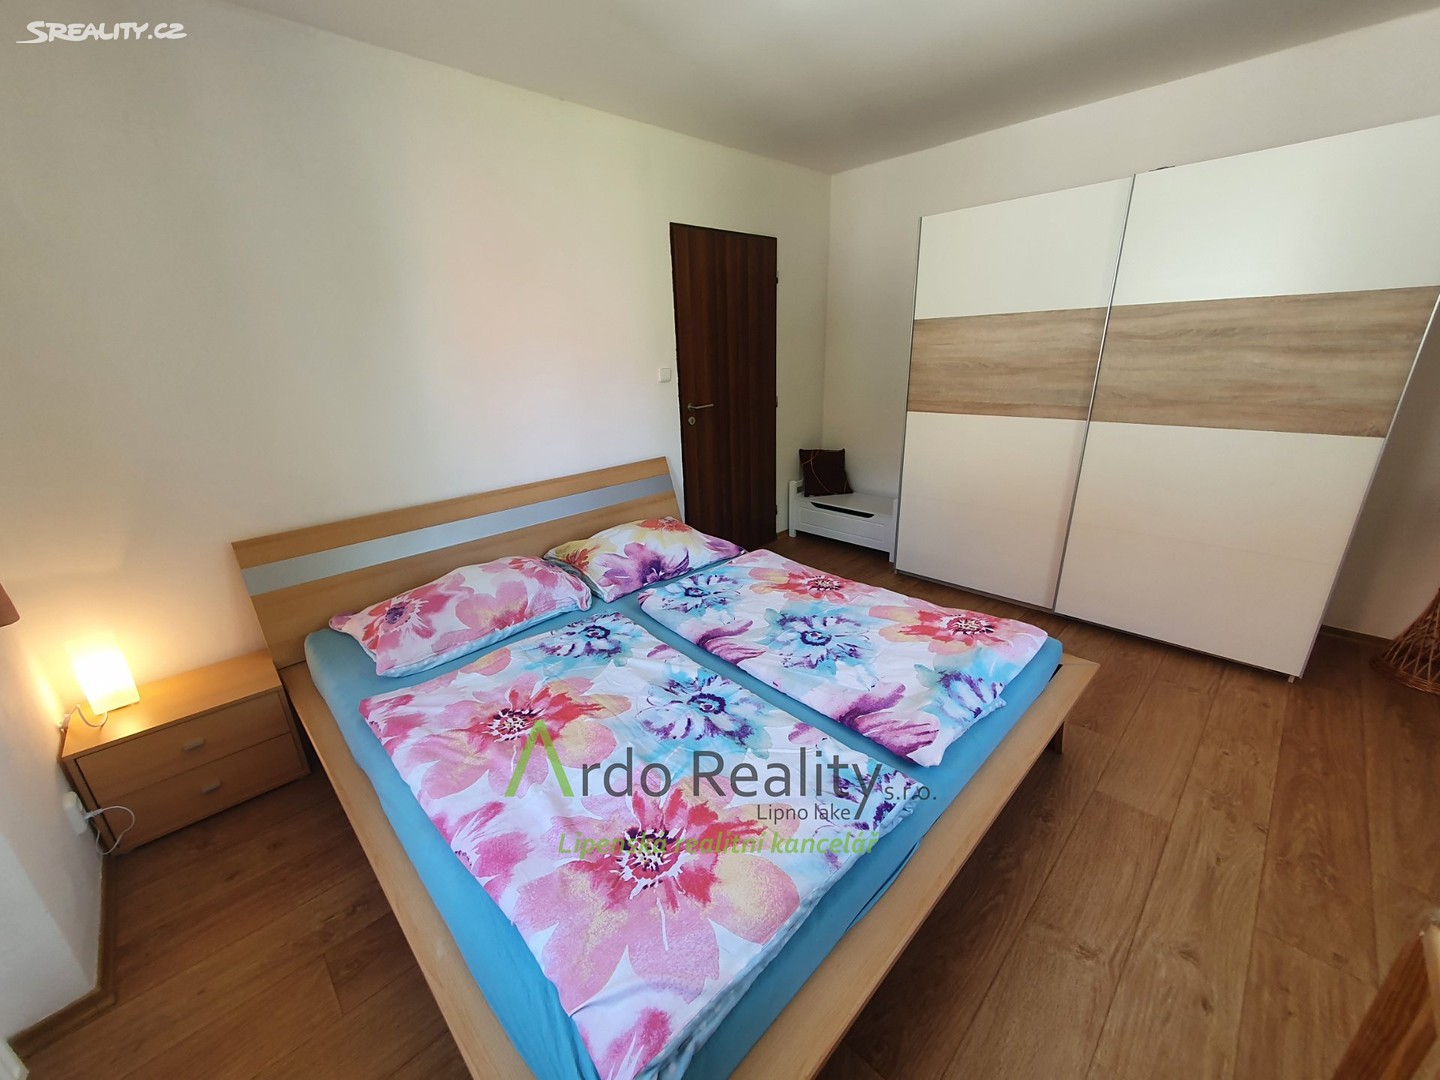 Prodej bytu 4+1 156 m² (Mezonet), Lipno nad Vltavou, okres Český Krumlov